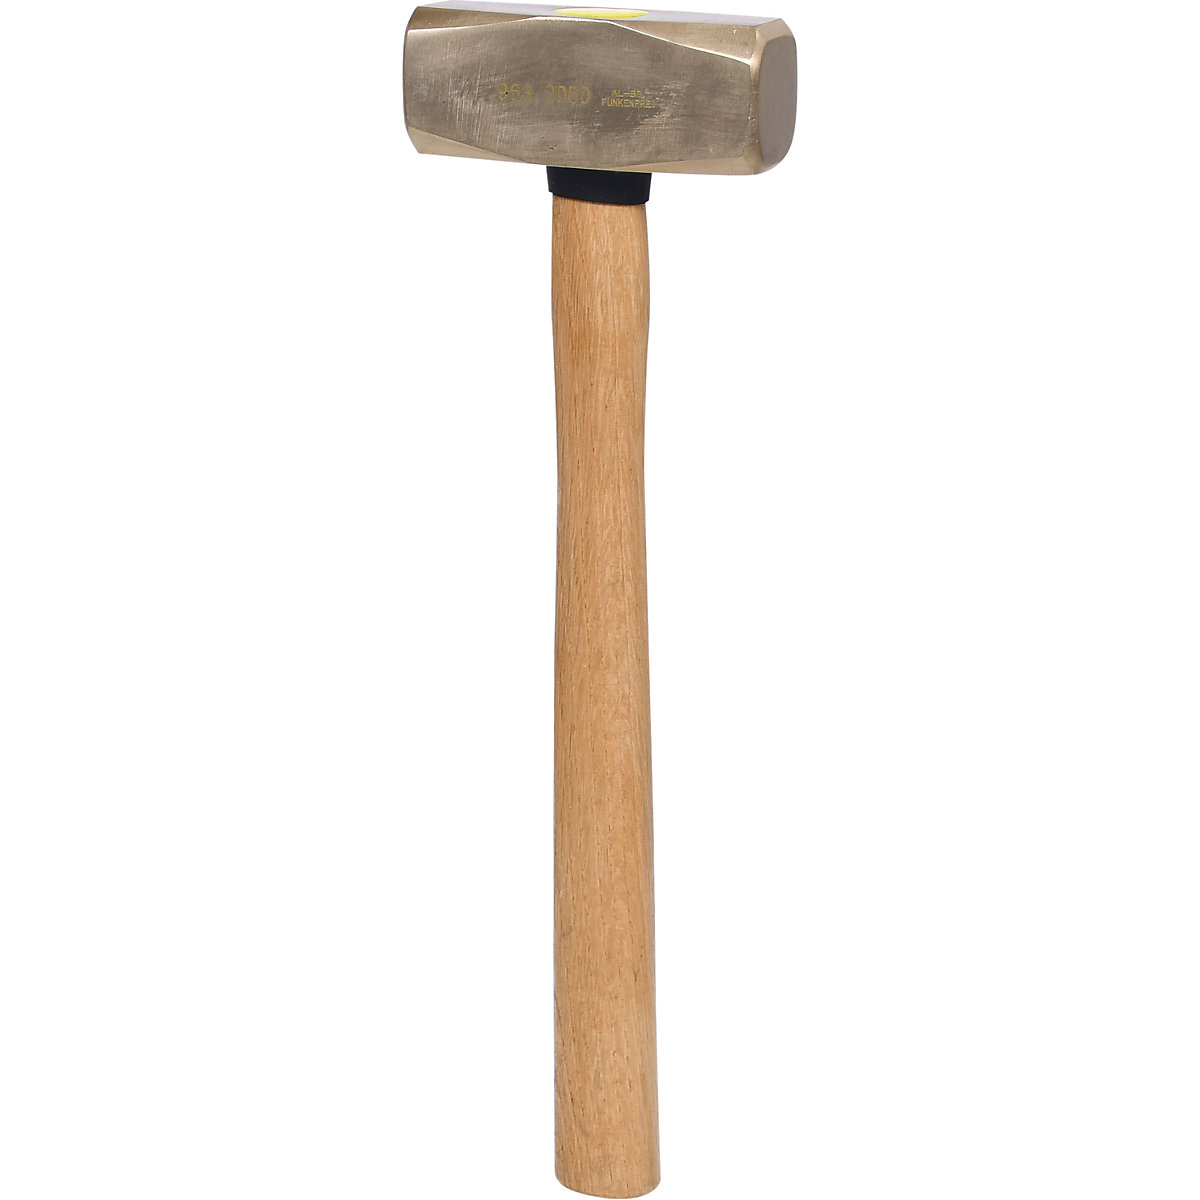 BRONZEplus club hammer - KS Tools